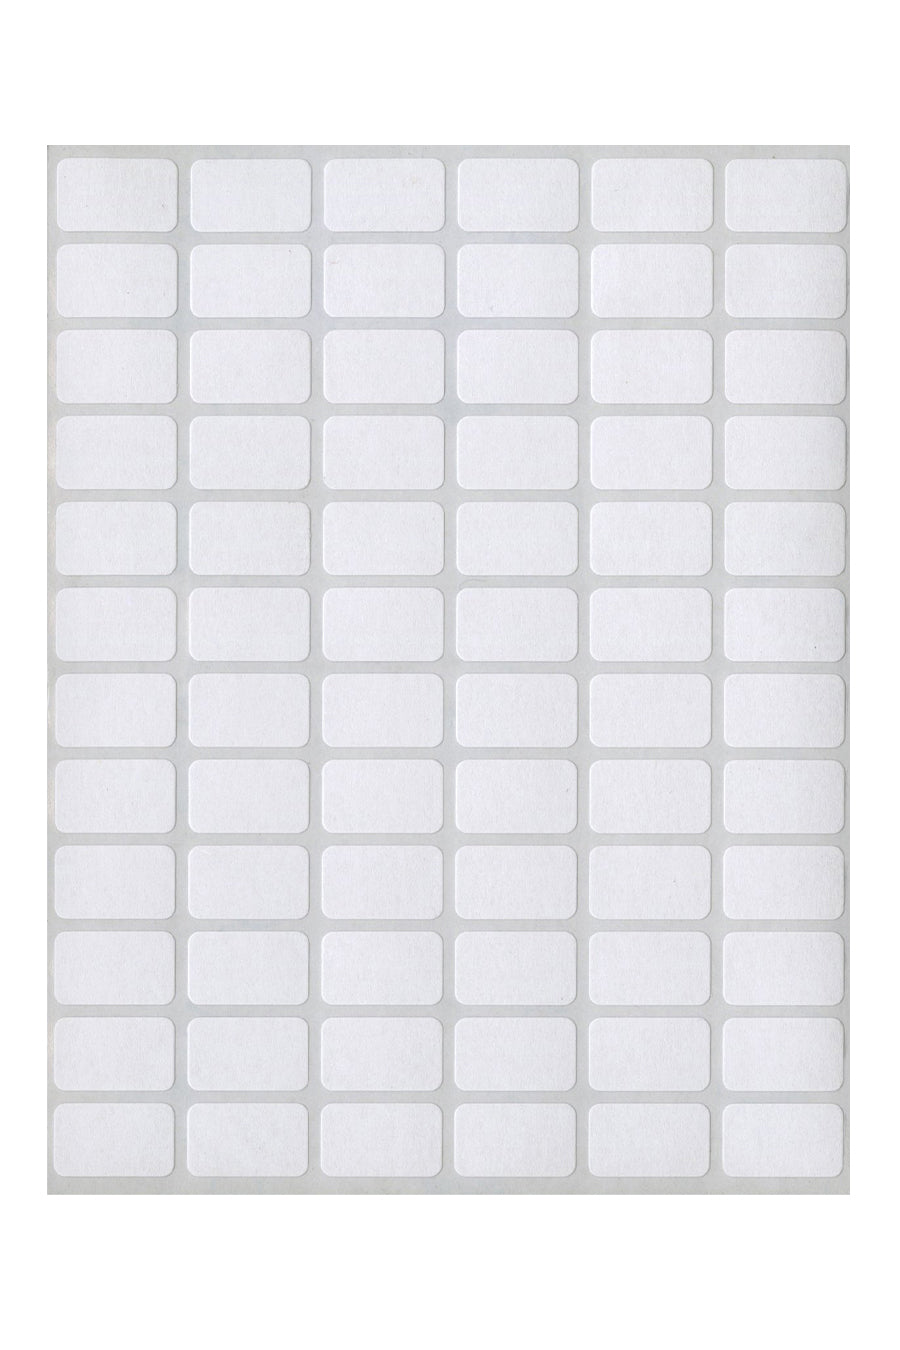 White Multi-Purpose Labels, 3/8" x 5/8", Rectangle, 1000/Bx